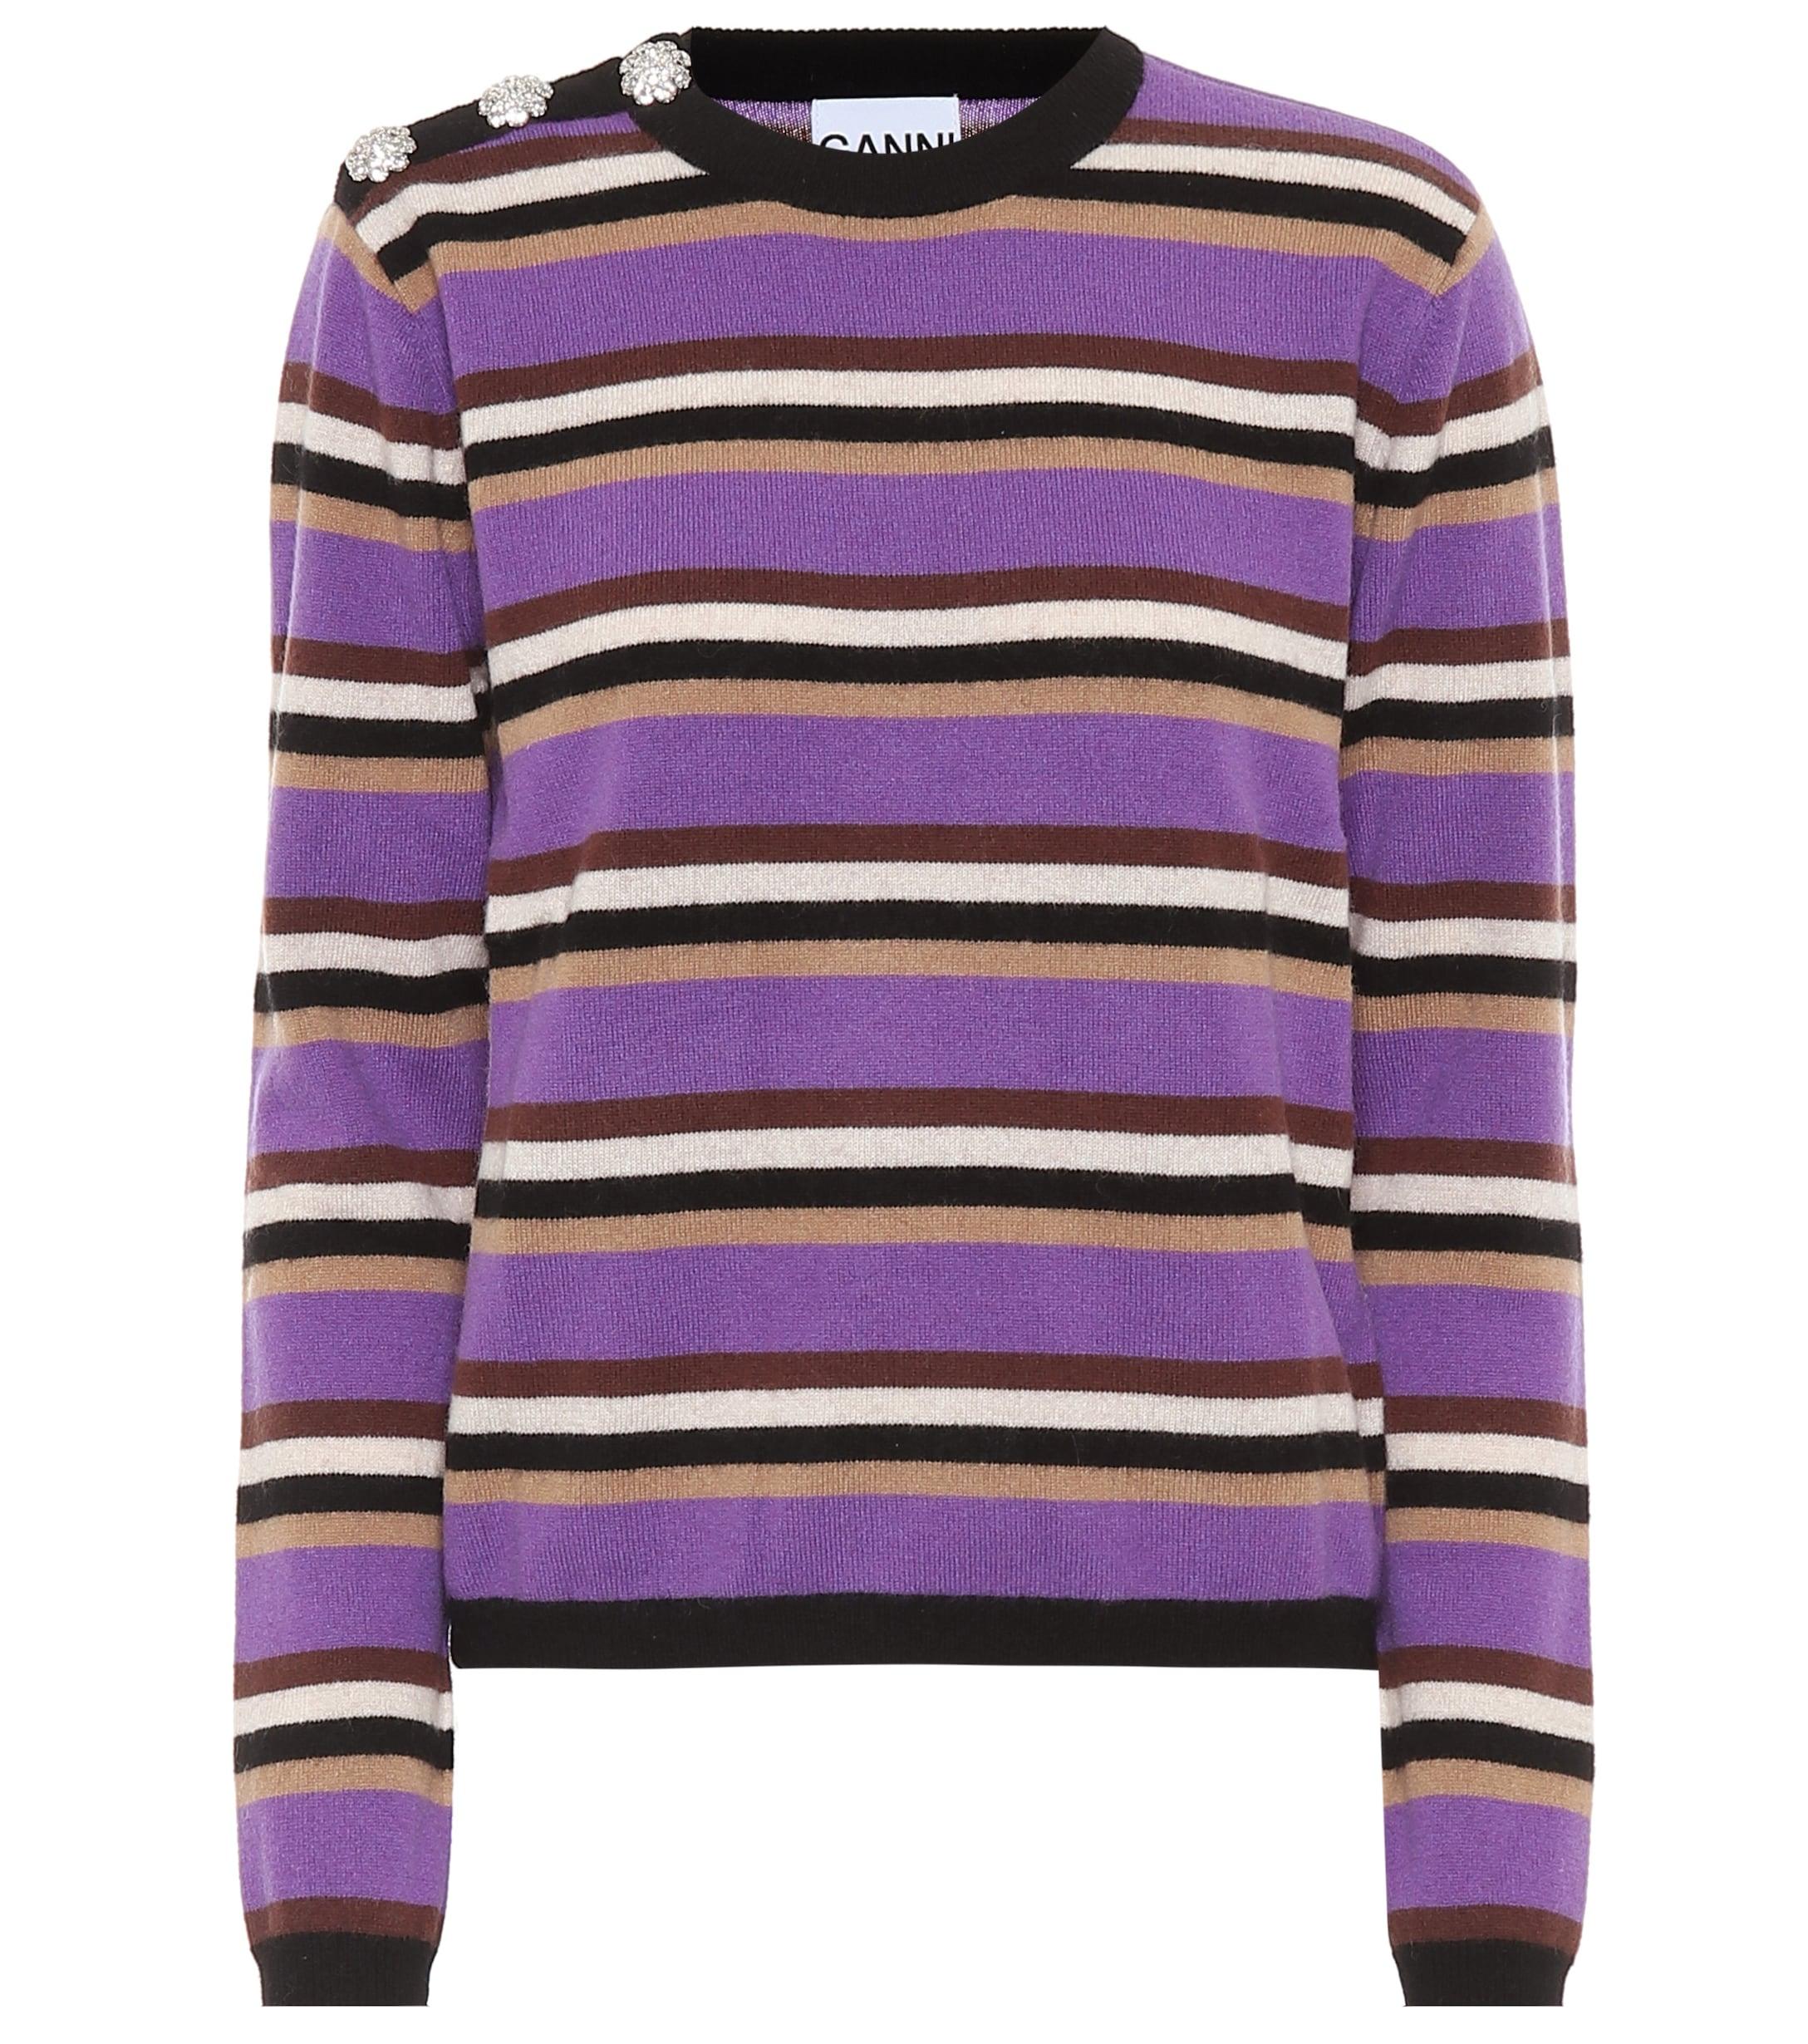 Ganni Embellished Striped Cashmere Sweater in Purple - Lyst